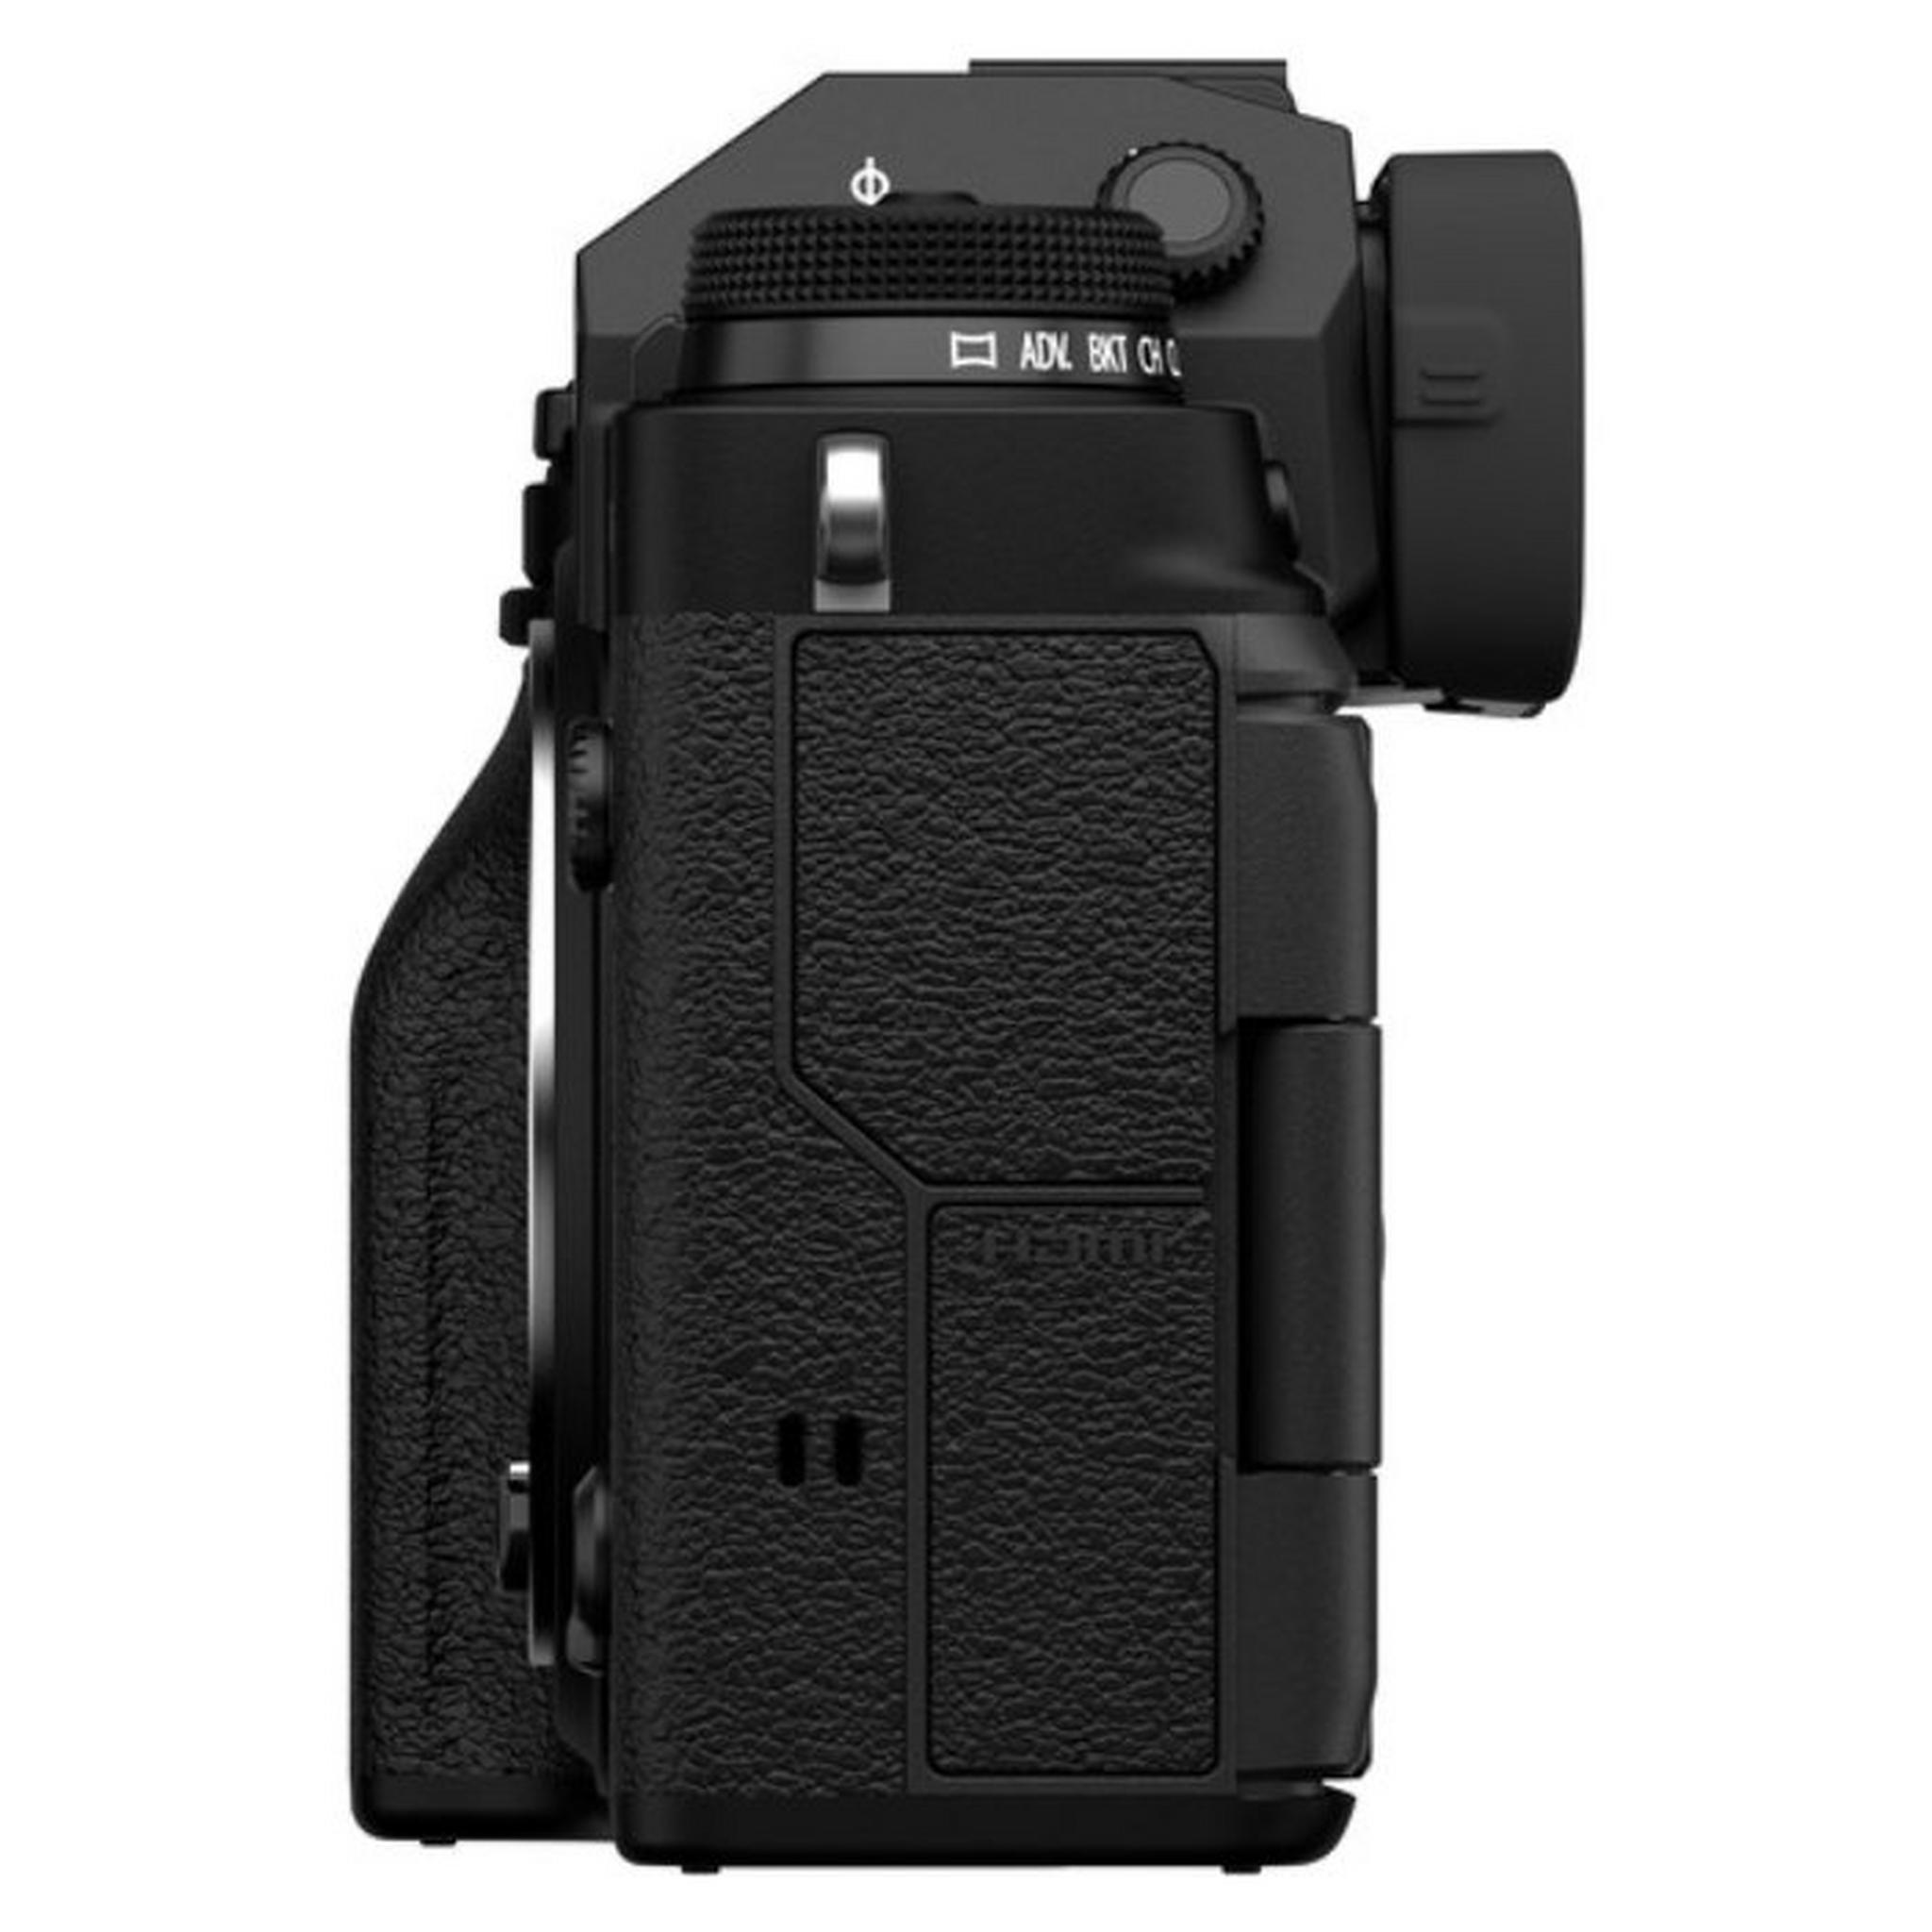 Fujifilm X-T4 Mirrorless Digital Camera with 18-55mm Lens - Black